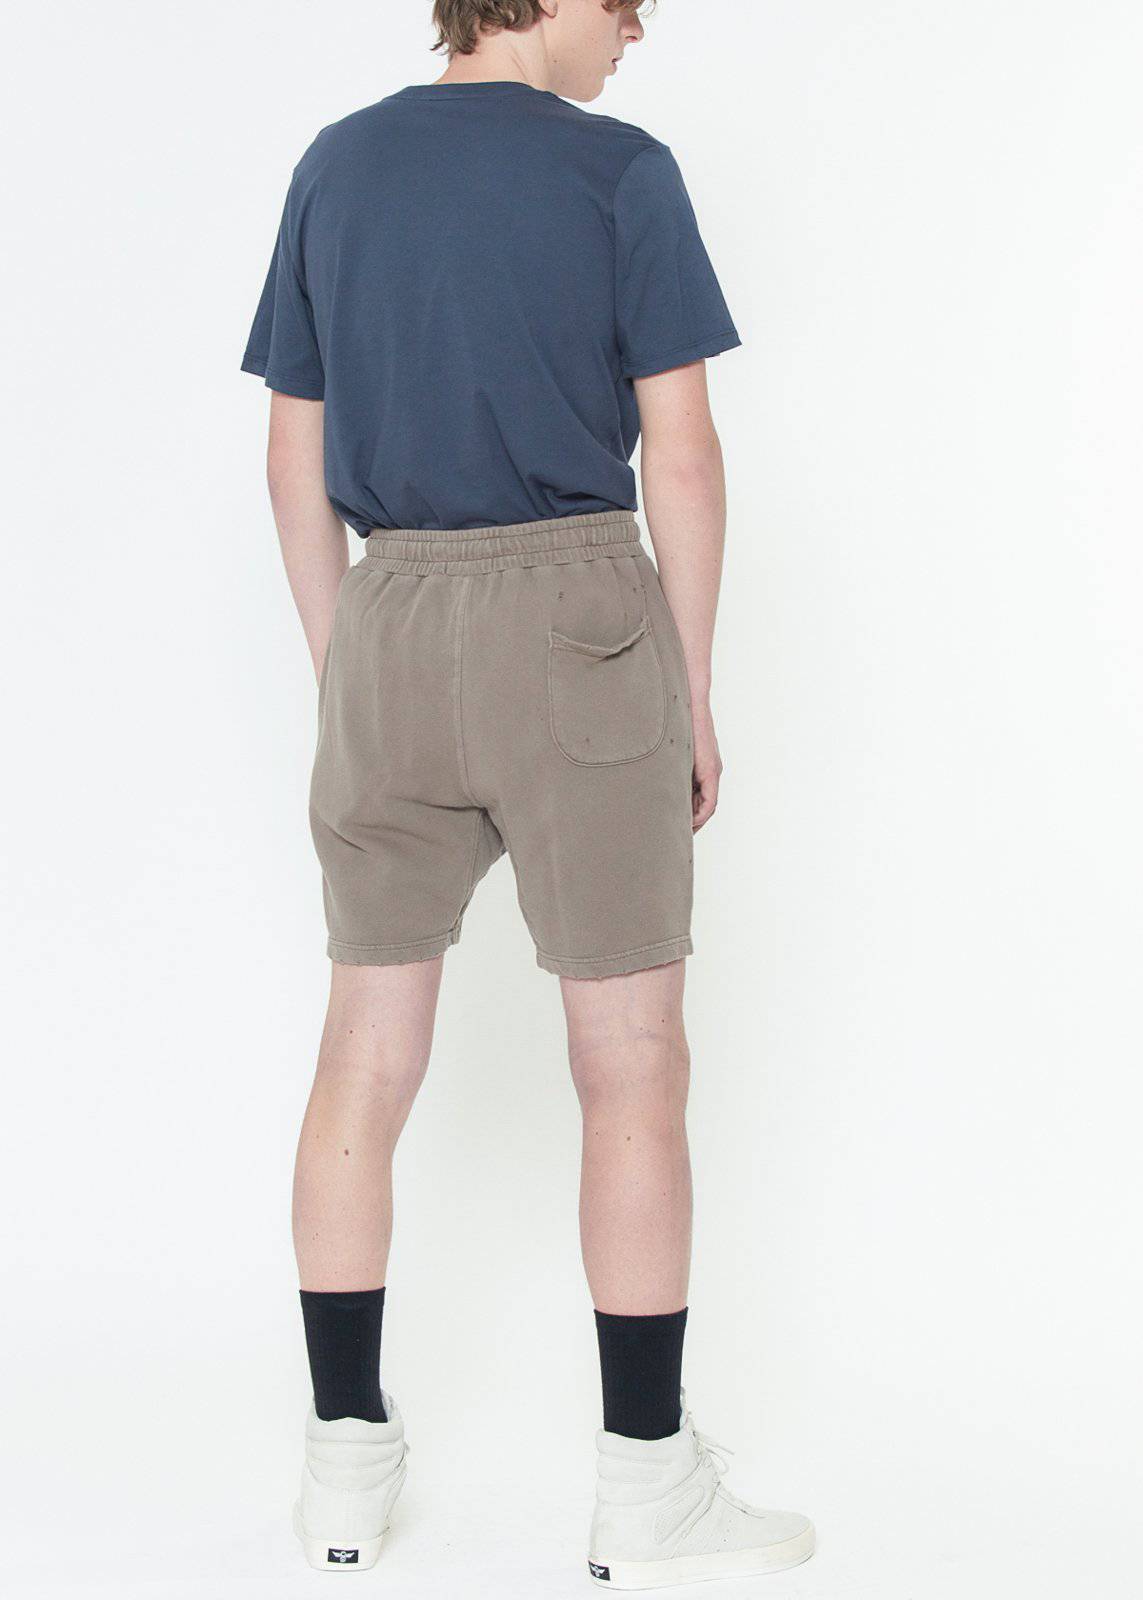 Konus Men's Garment Dyed French Terry Shorts in Mocha by Shop at Konus